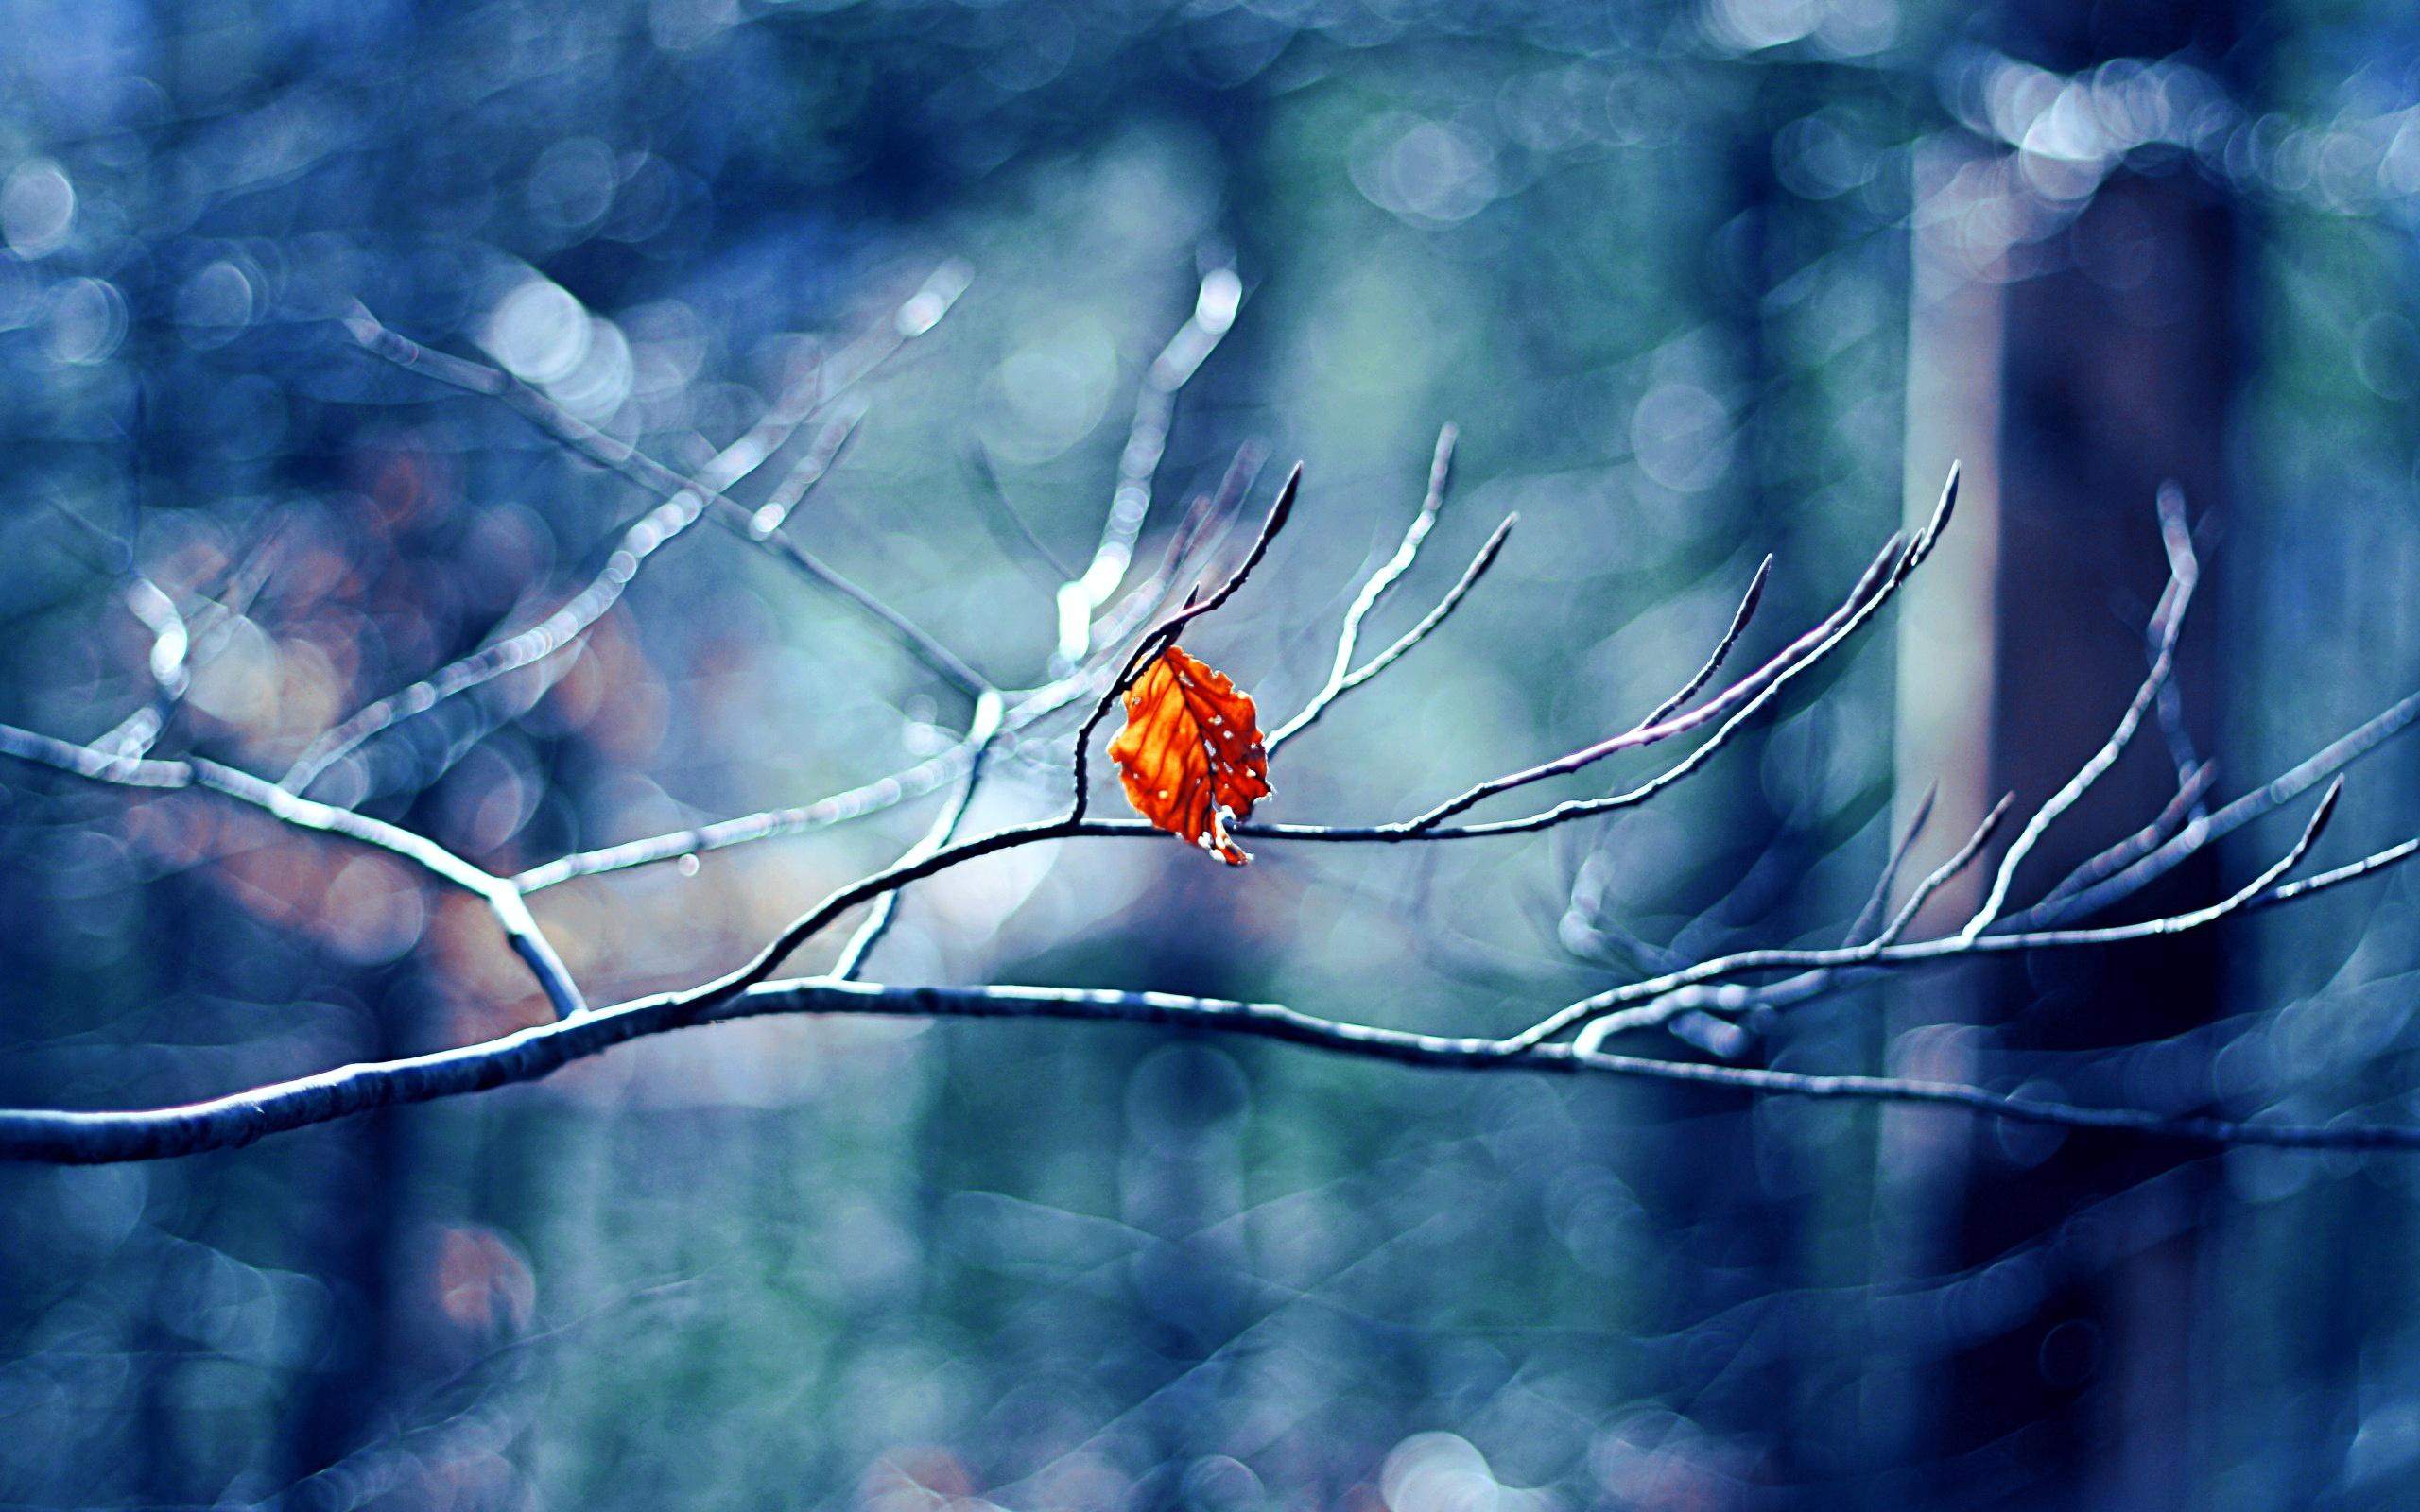 Winter Tree Leaf Wallpaper in jpg format for free download